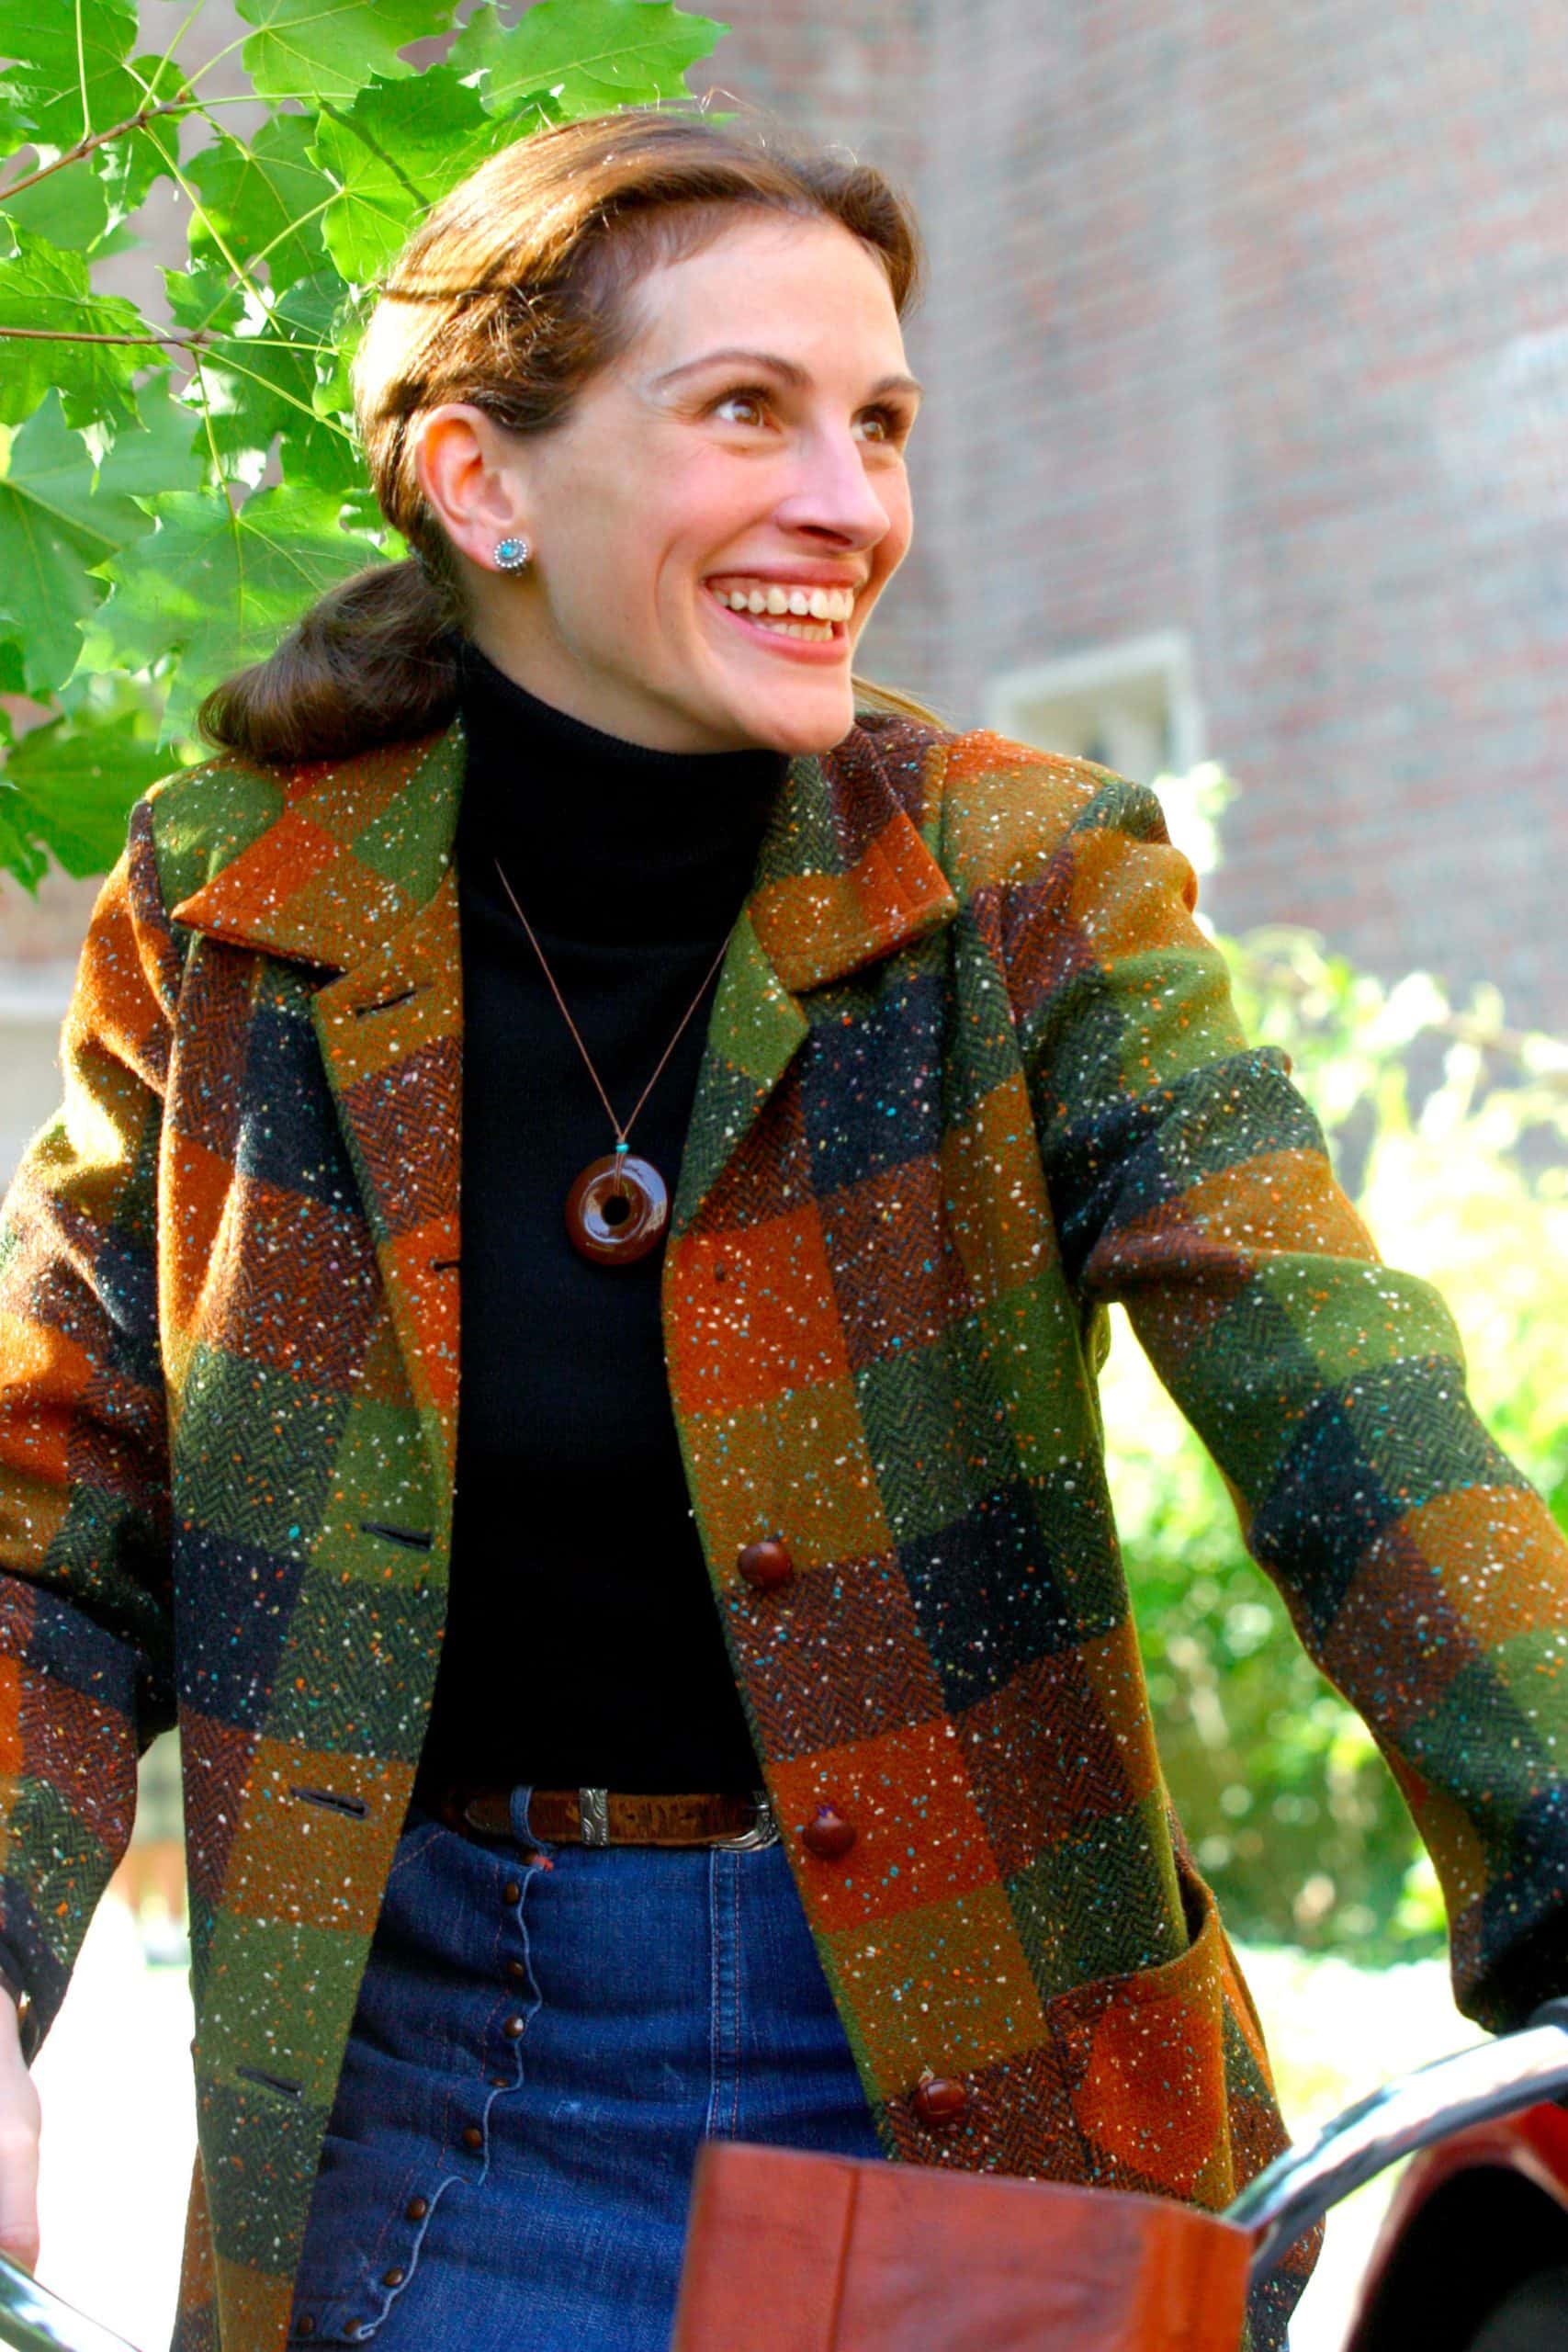 MONA LISA SMILE, Julia Roberts, 2003